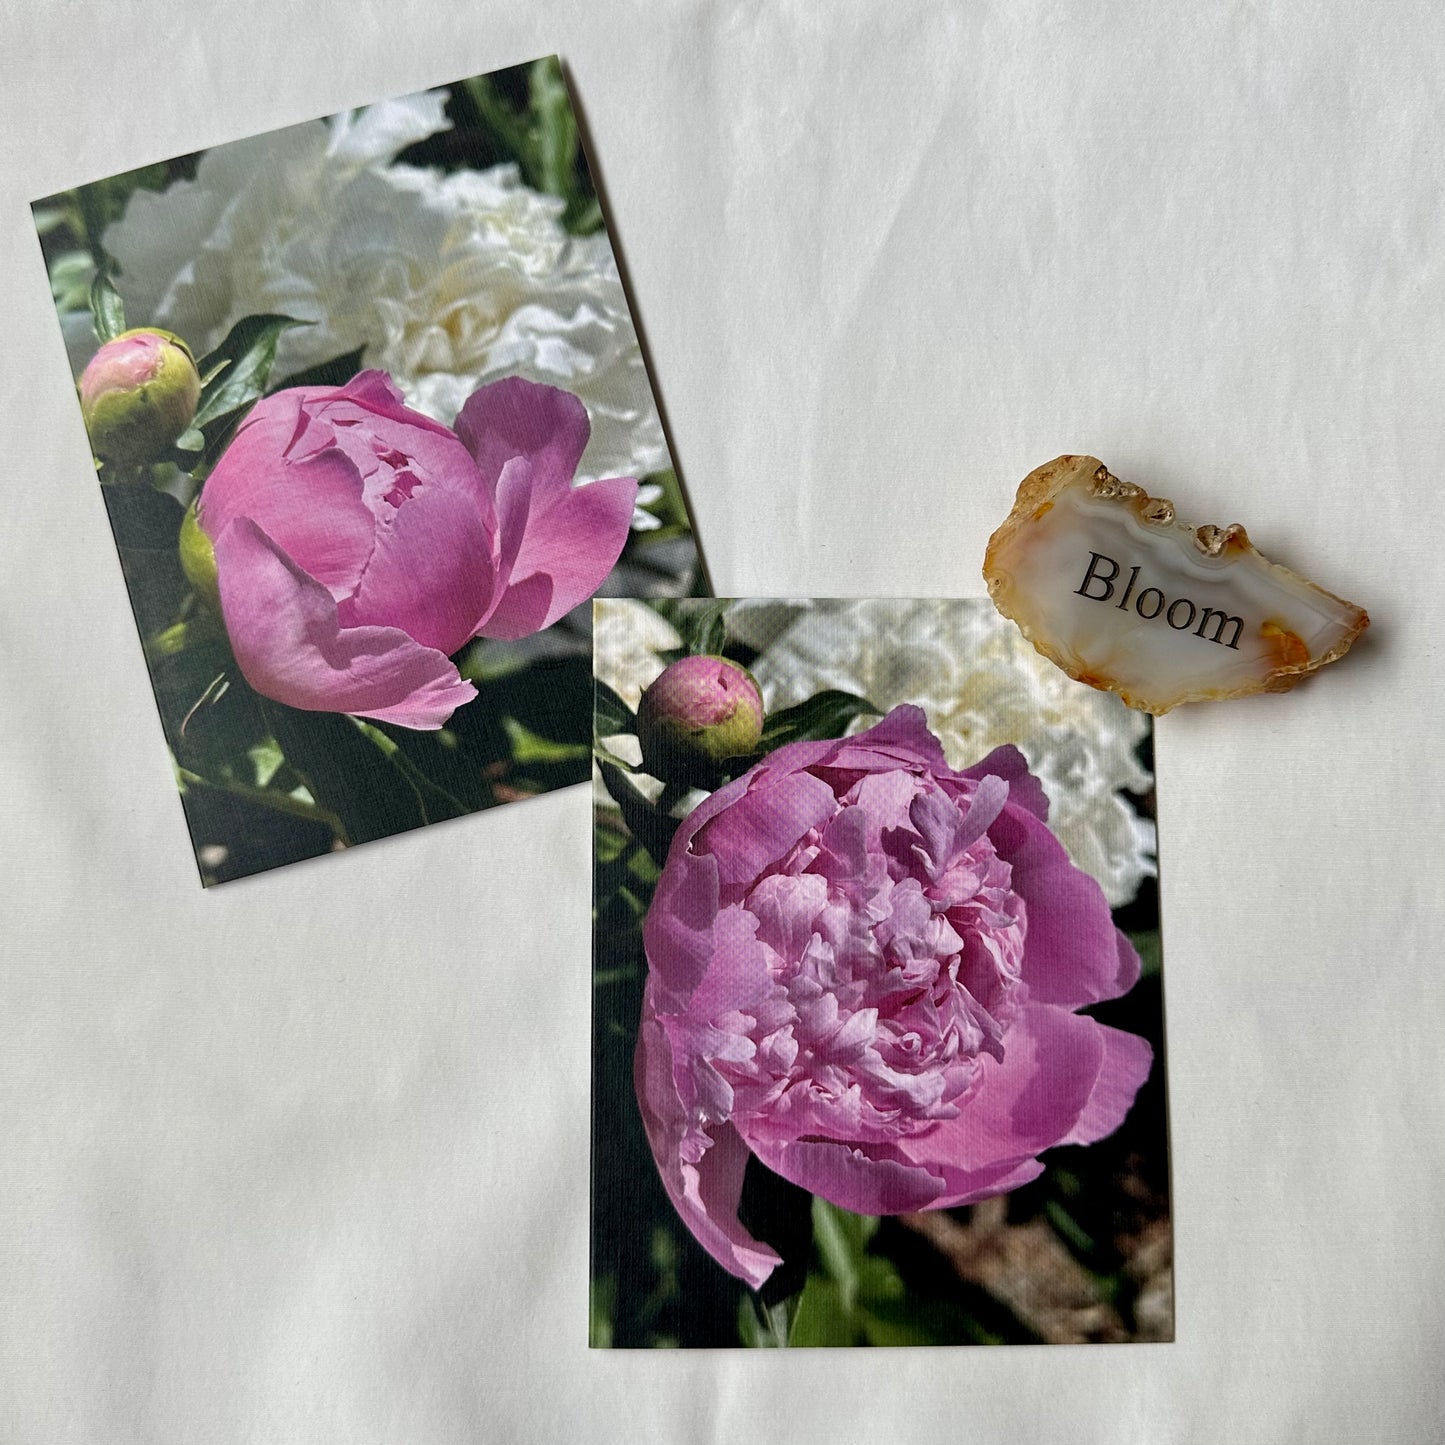 Precious Pink Peonies Original Nature Photography Greeting Card Boxed Set of 2 with Kraft Envelopes